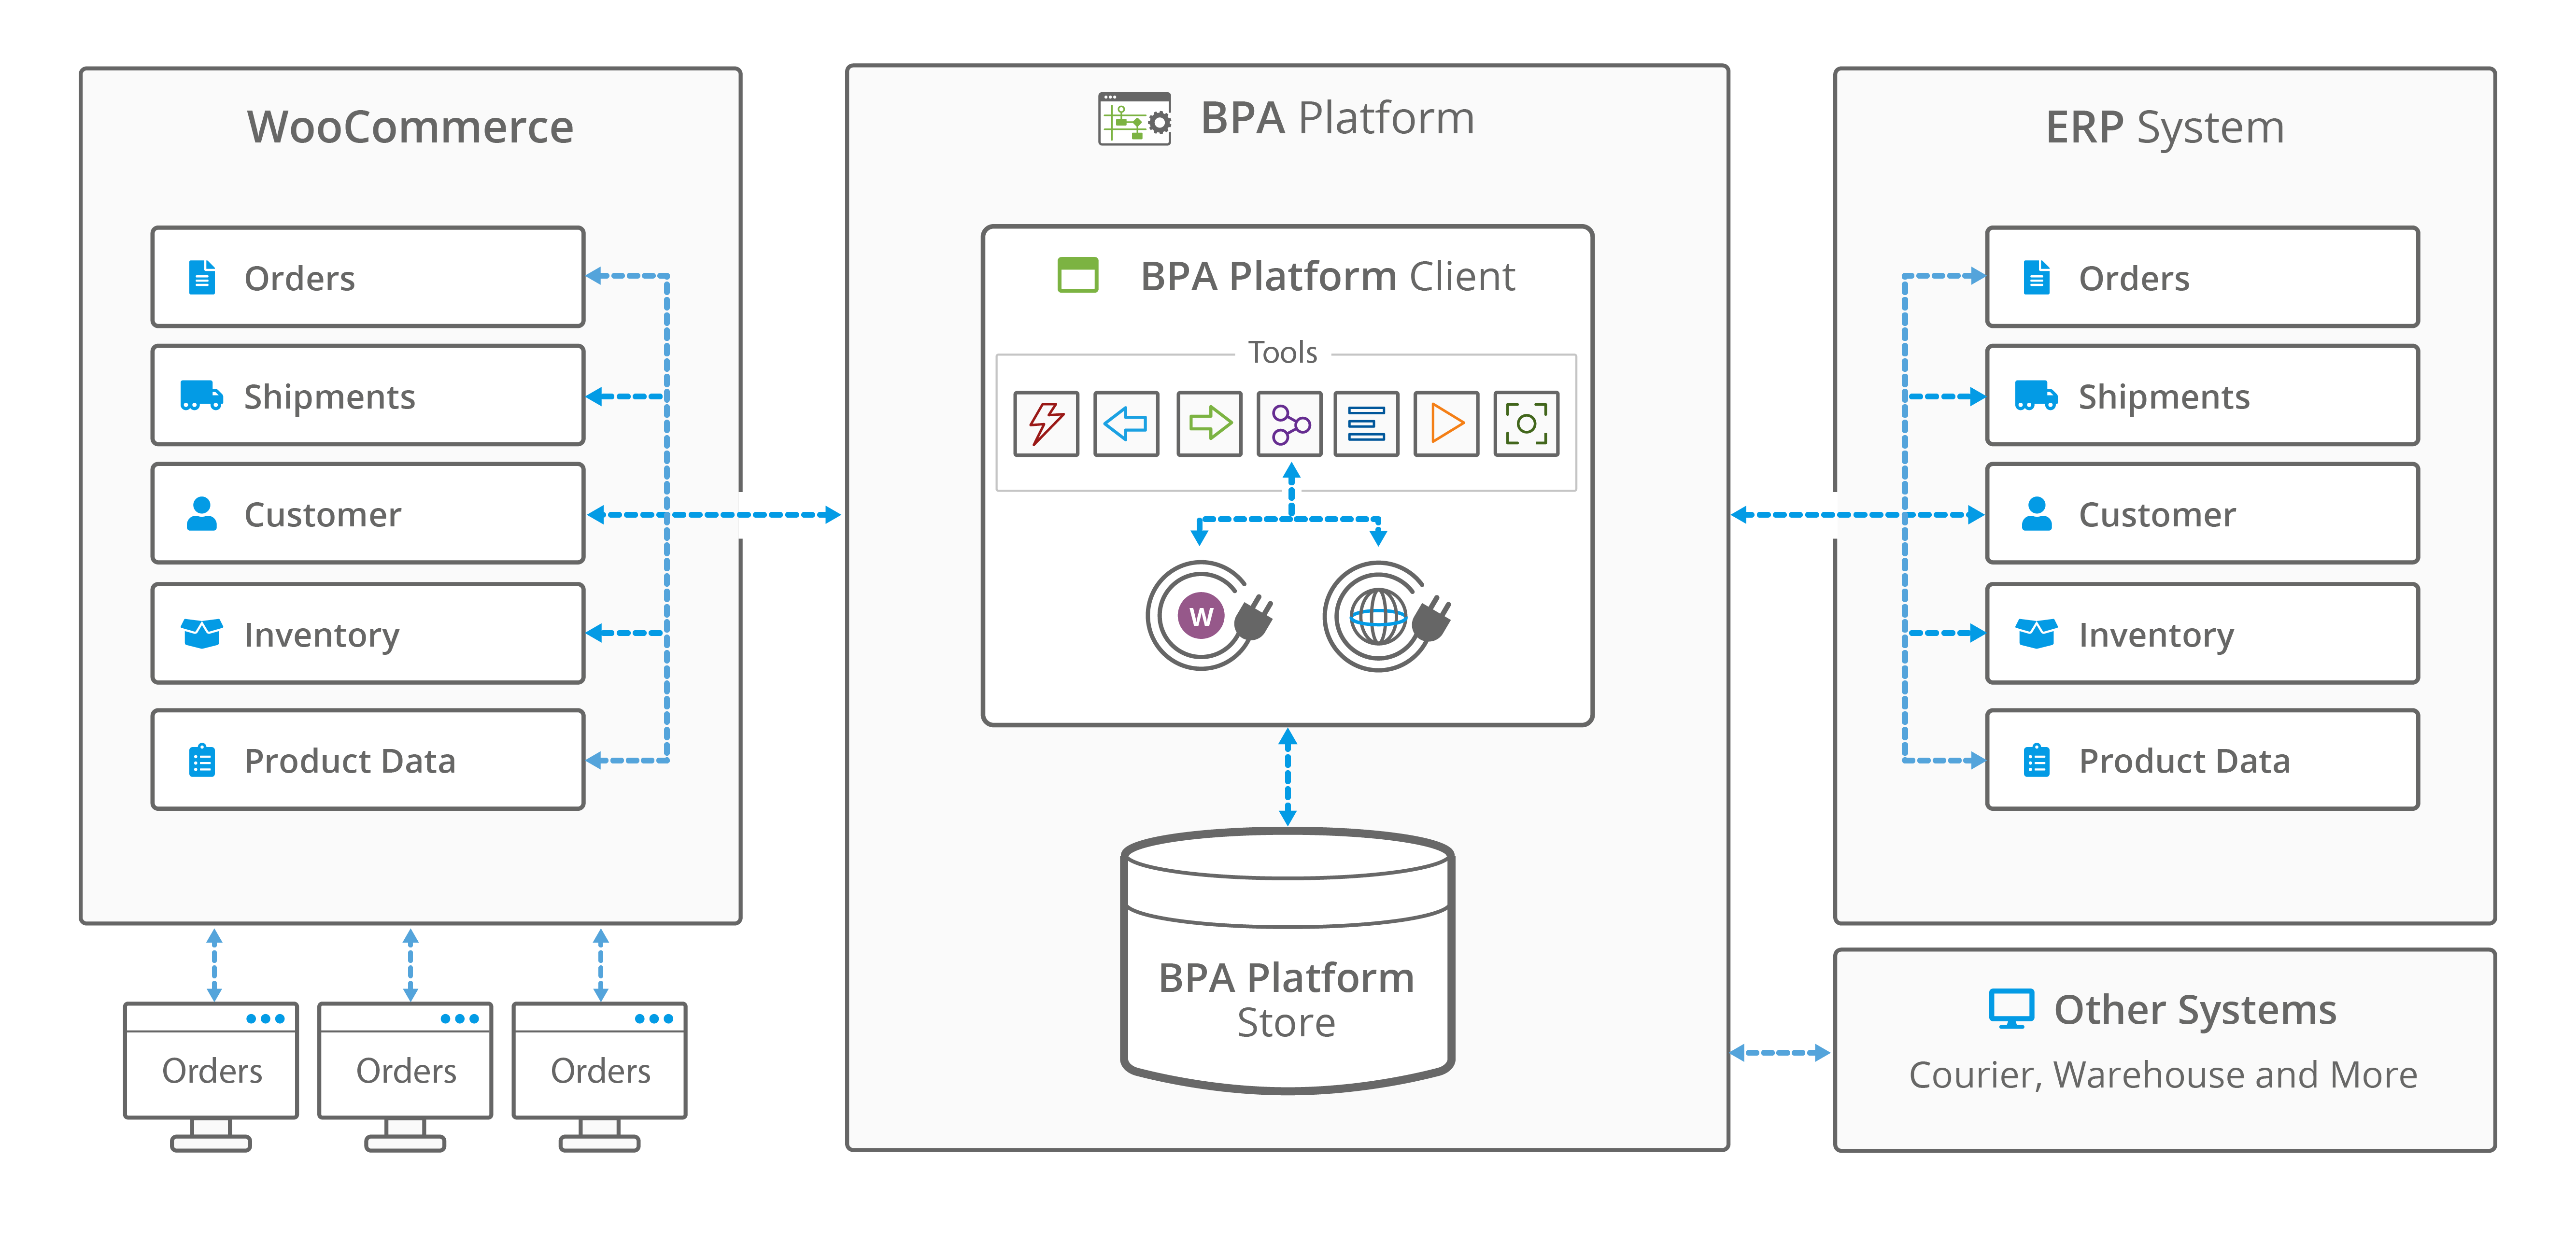 WooCommerce integration with ERP using BPA Platform